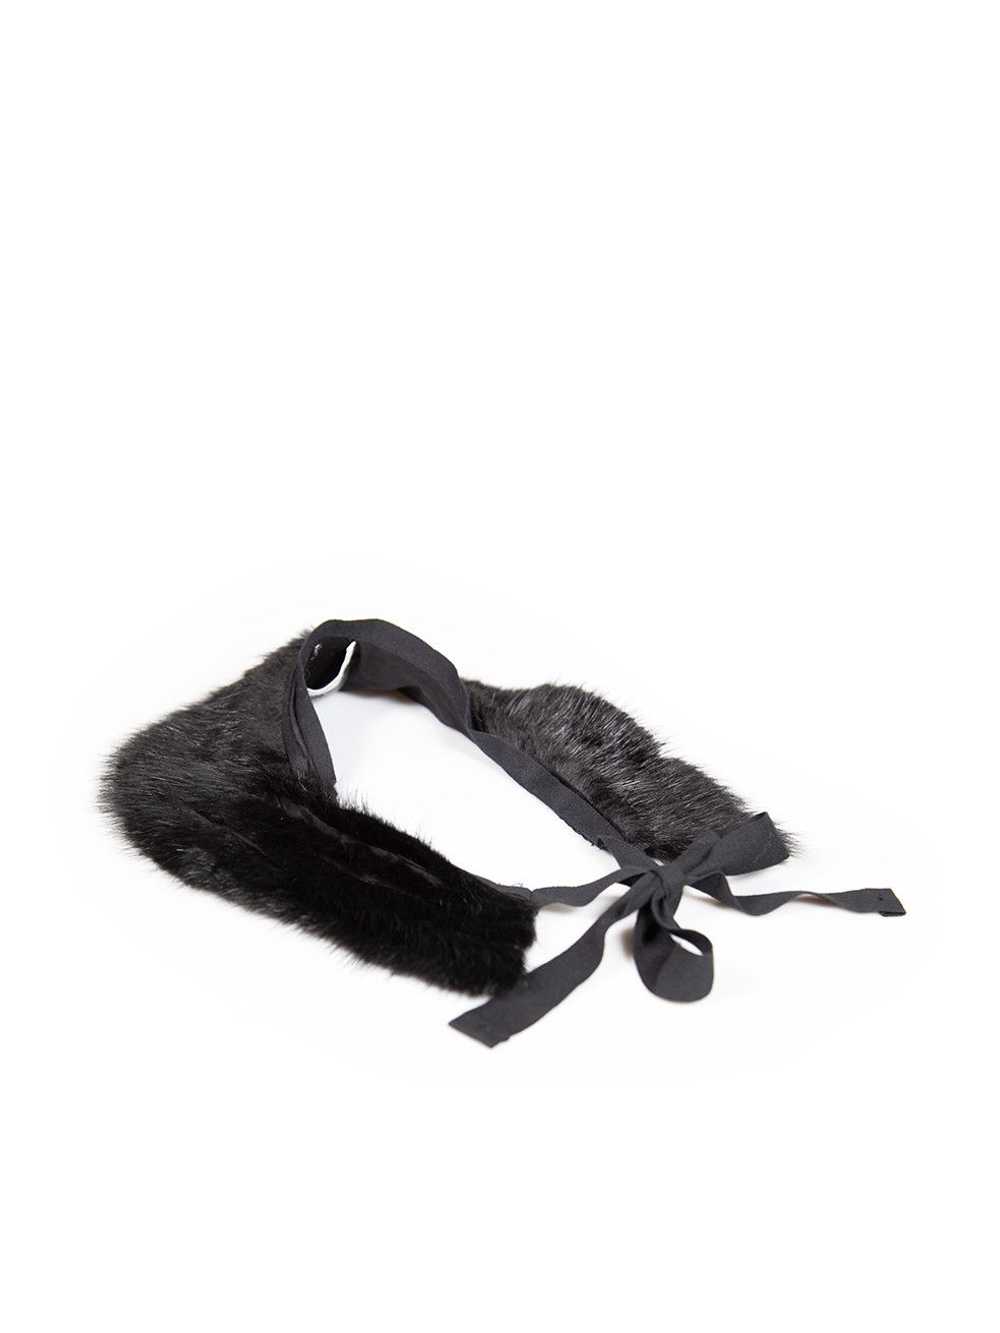 Prada Black Fur Tie Fastening Collar - image 2